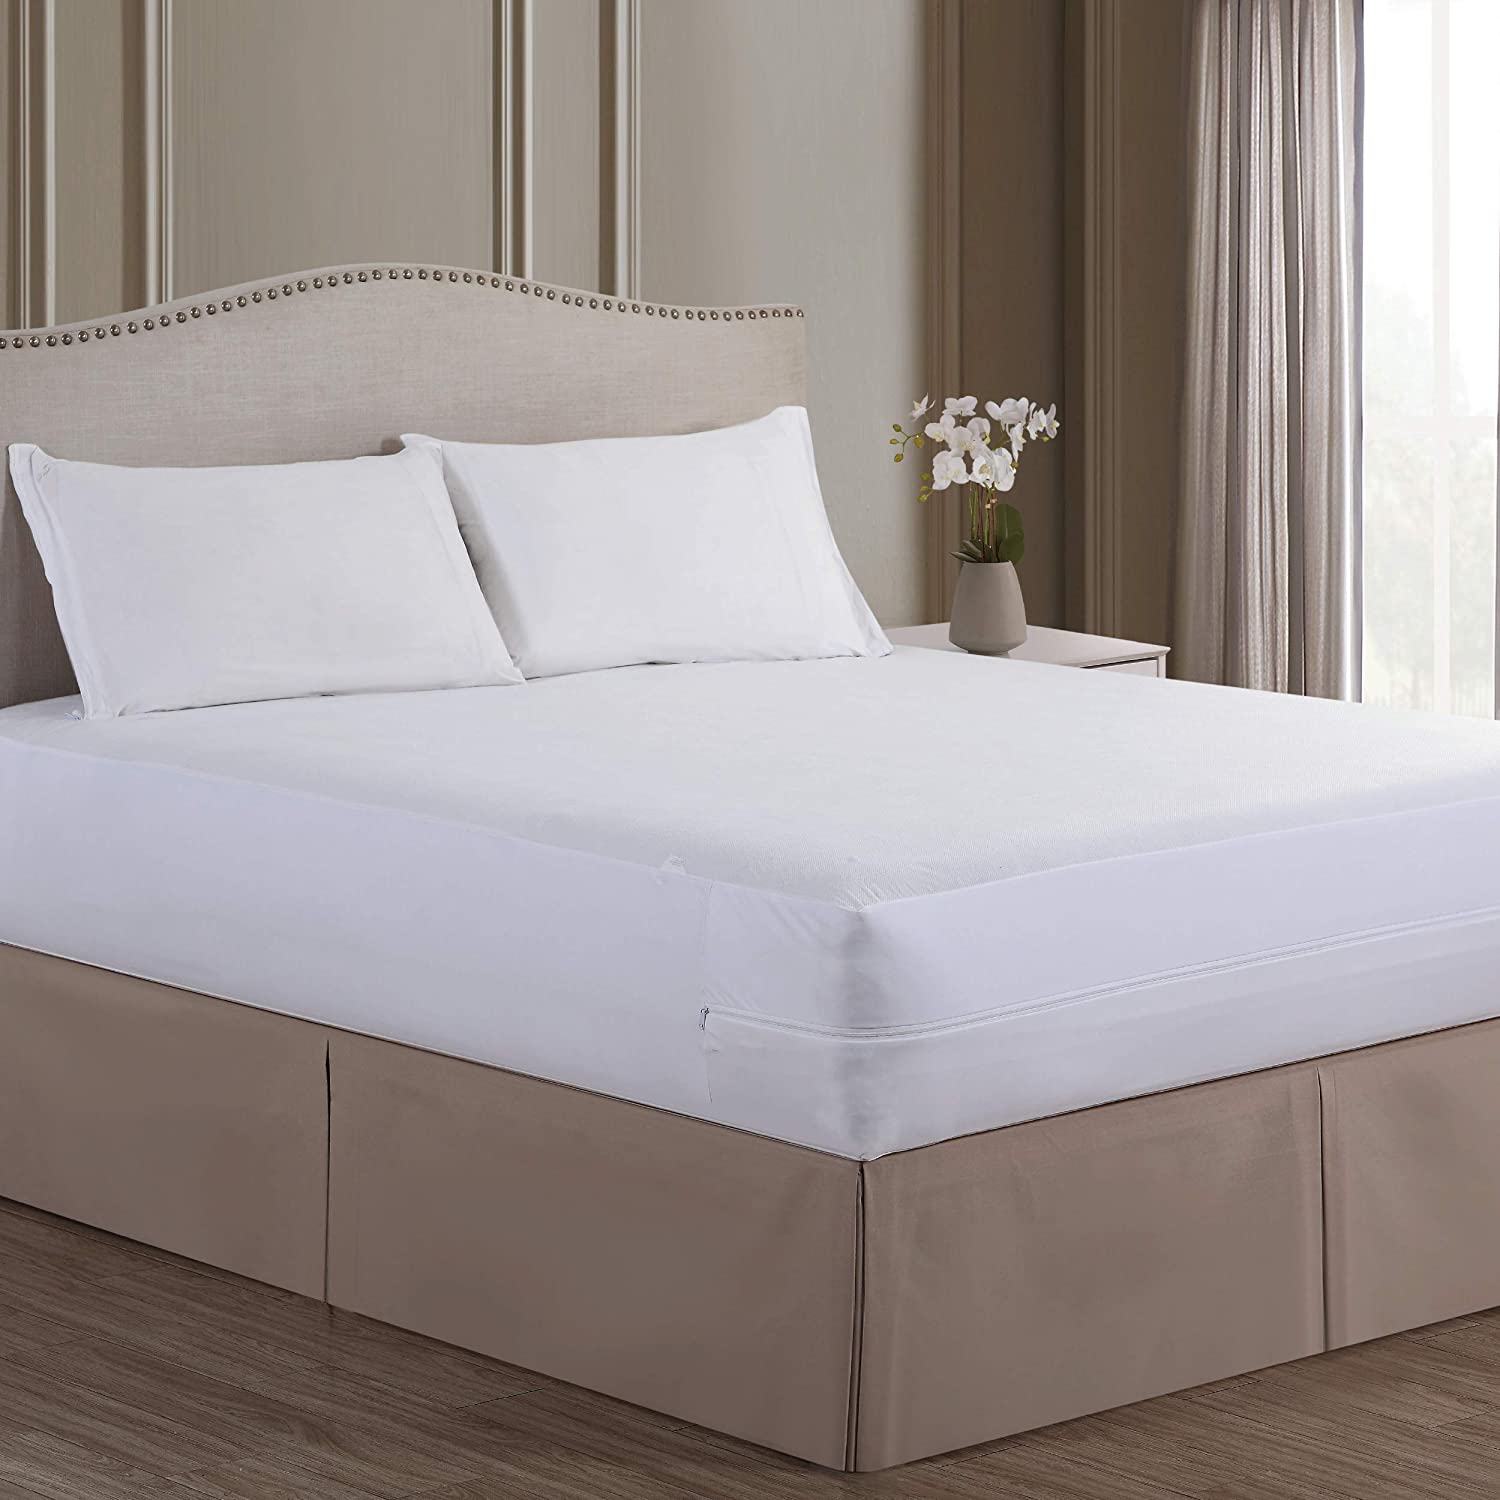 Cotton terry waterproof zipper mattress protector / Anti bed bug proof encasement